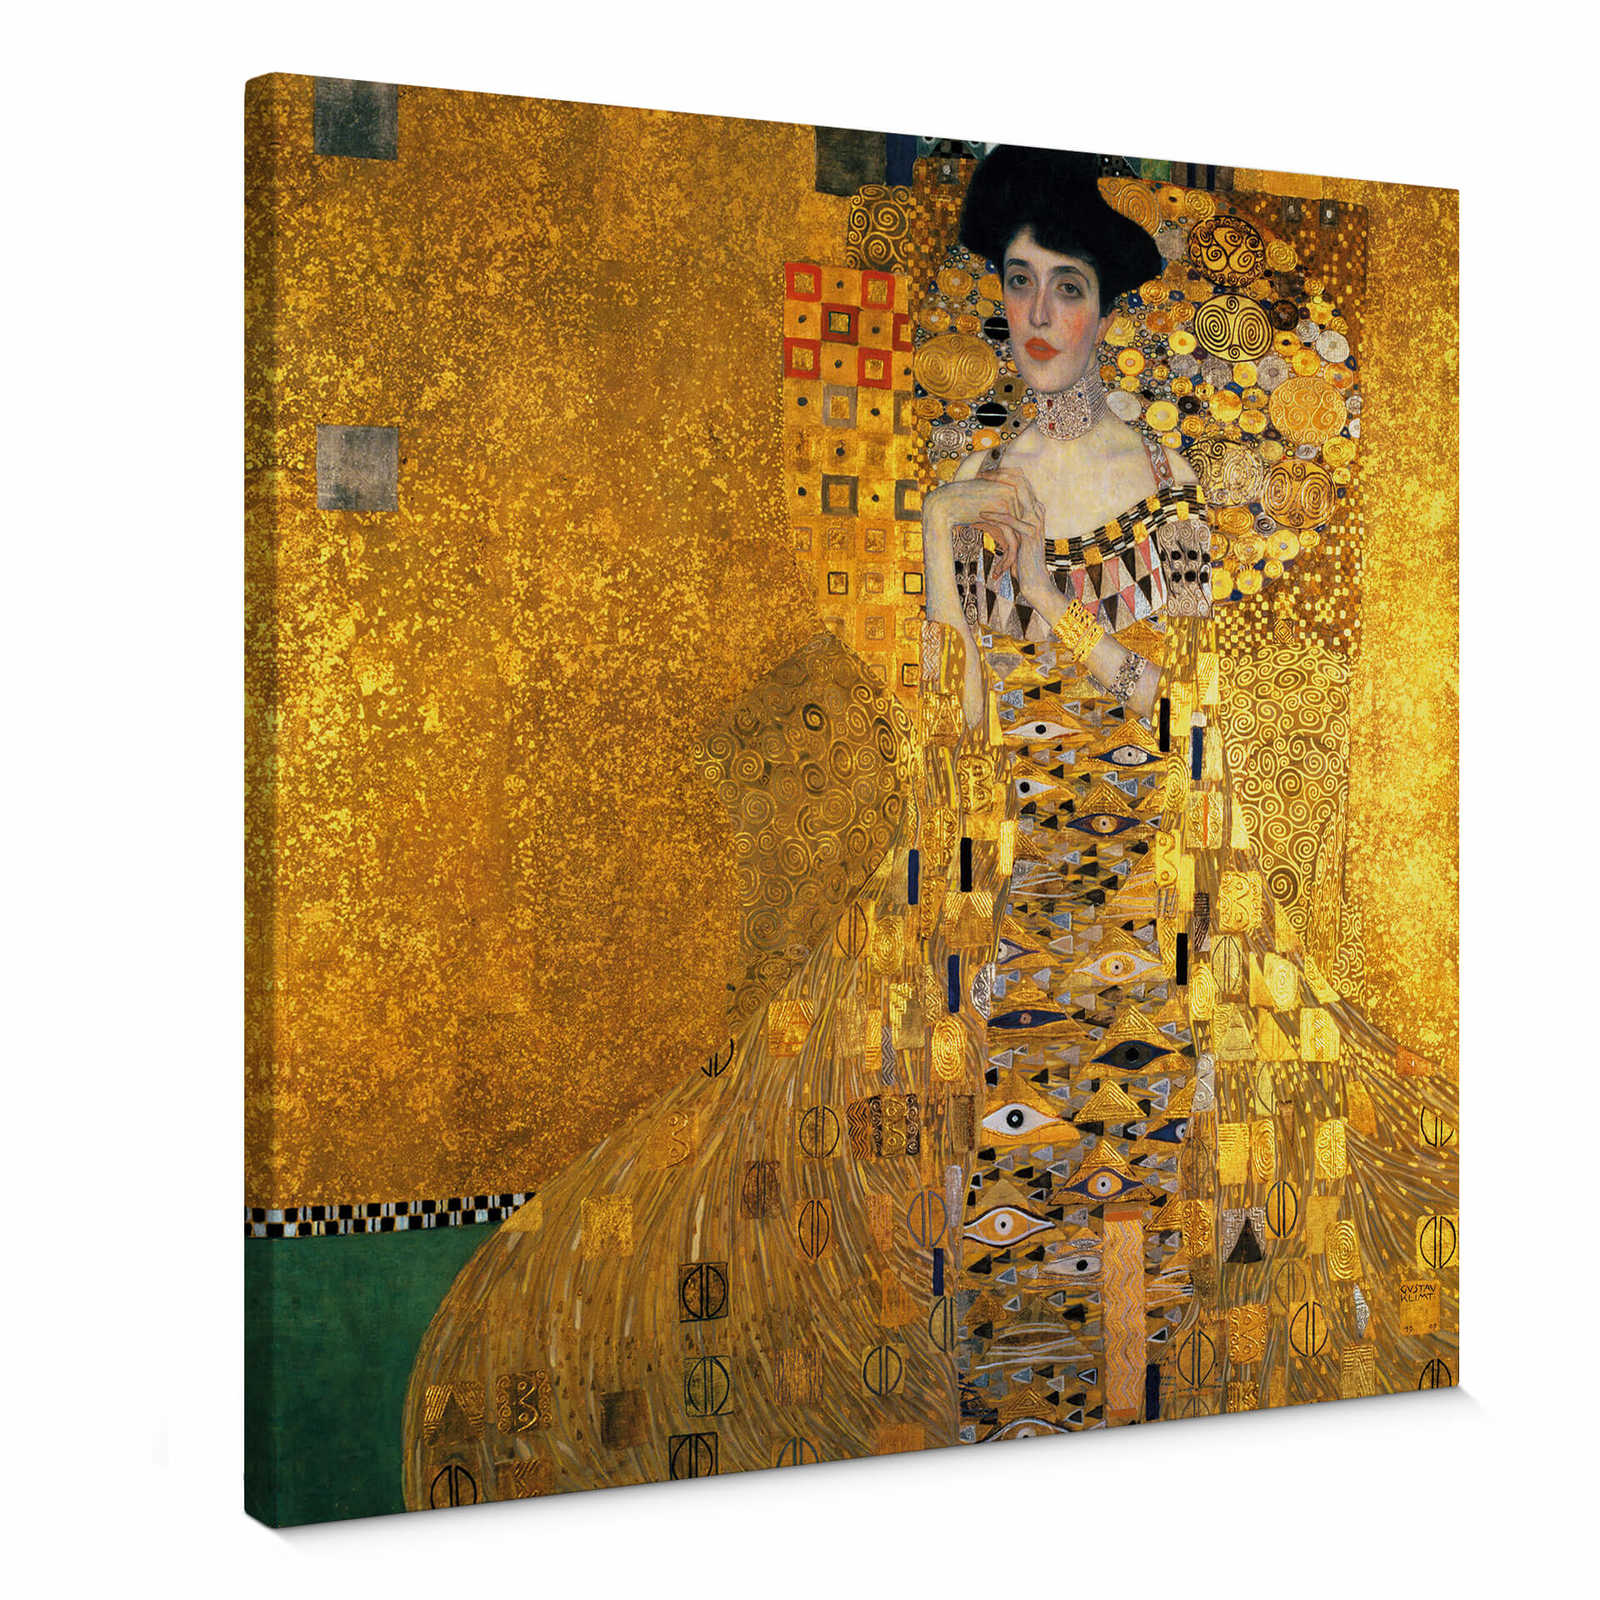         Quadratisches Leinwandbild "Adele" Gustav Klimt – 0,50 m x 0,50 m
    